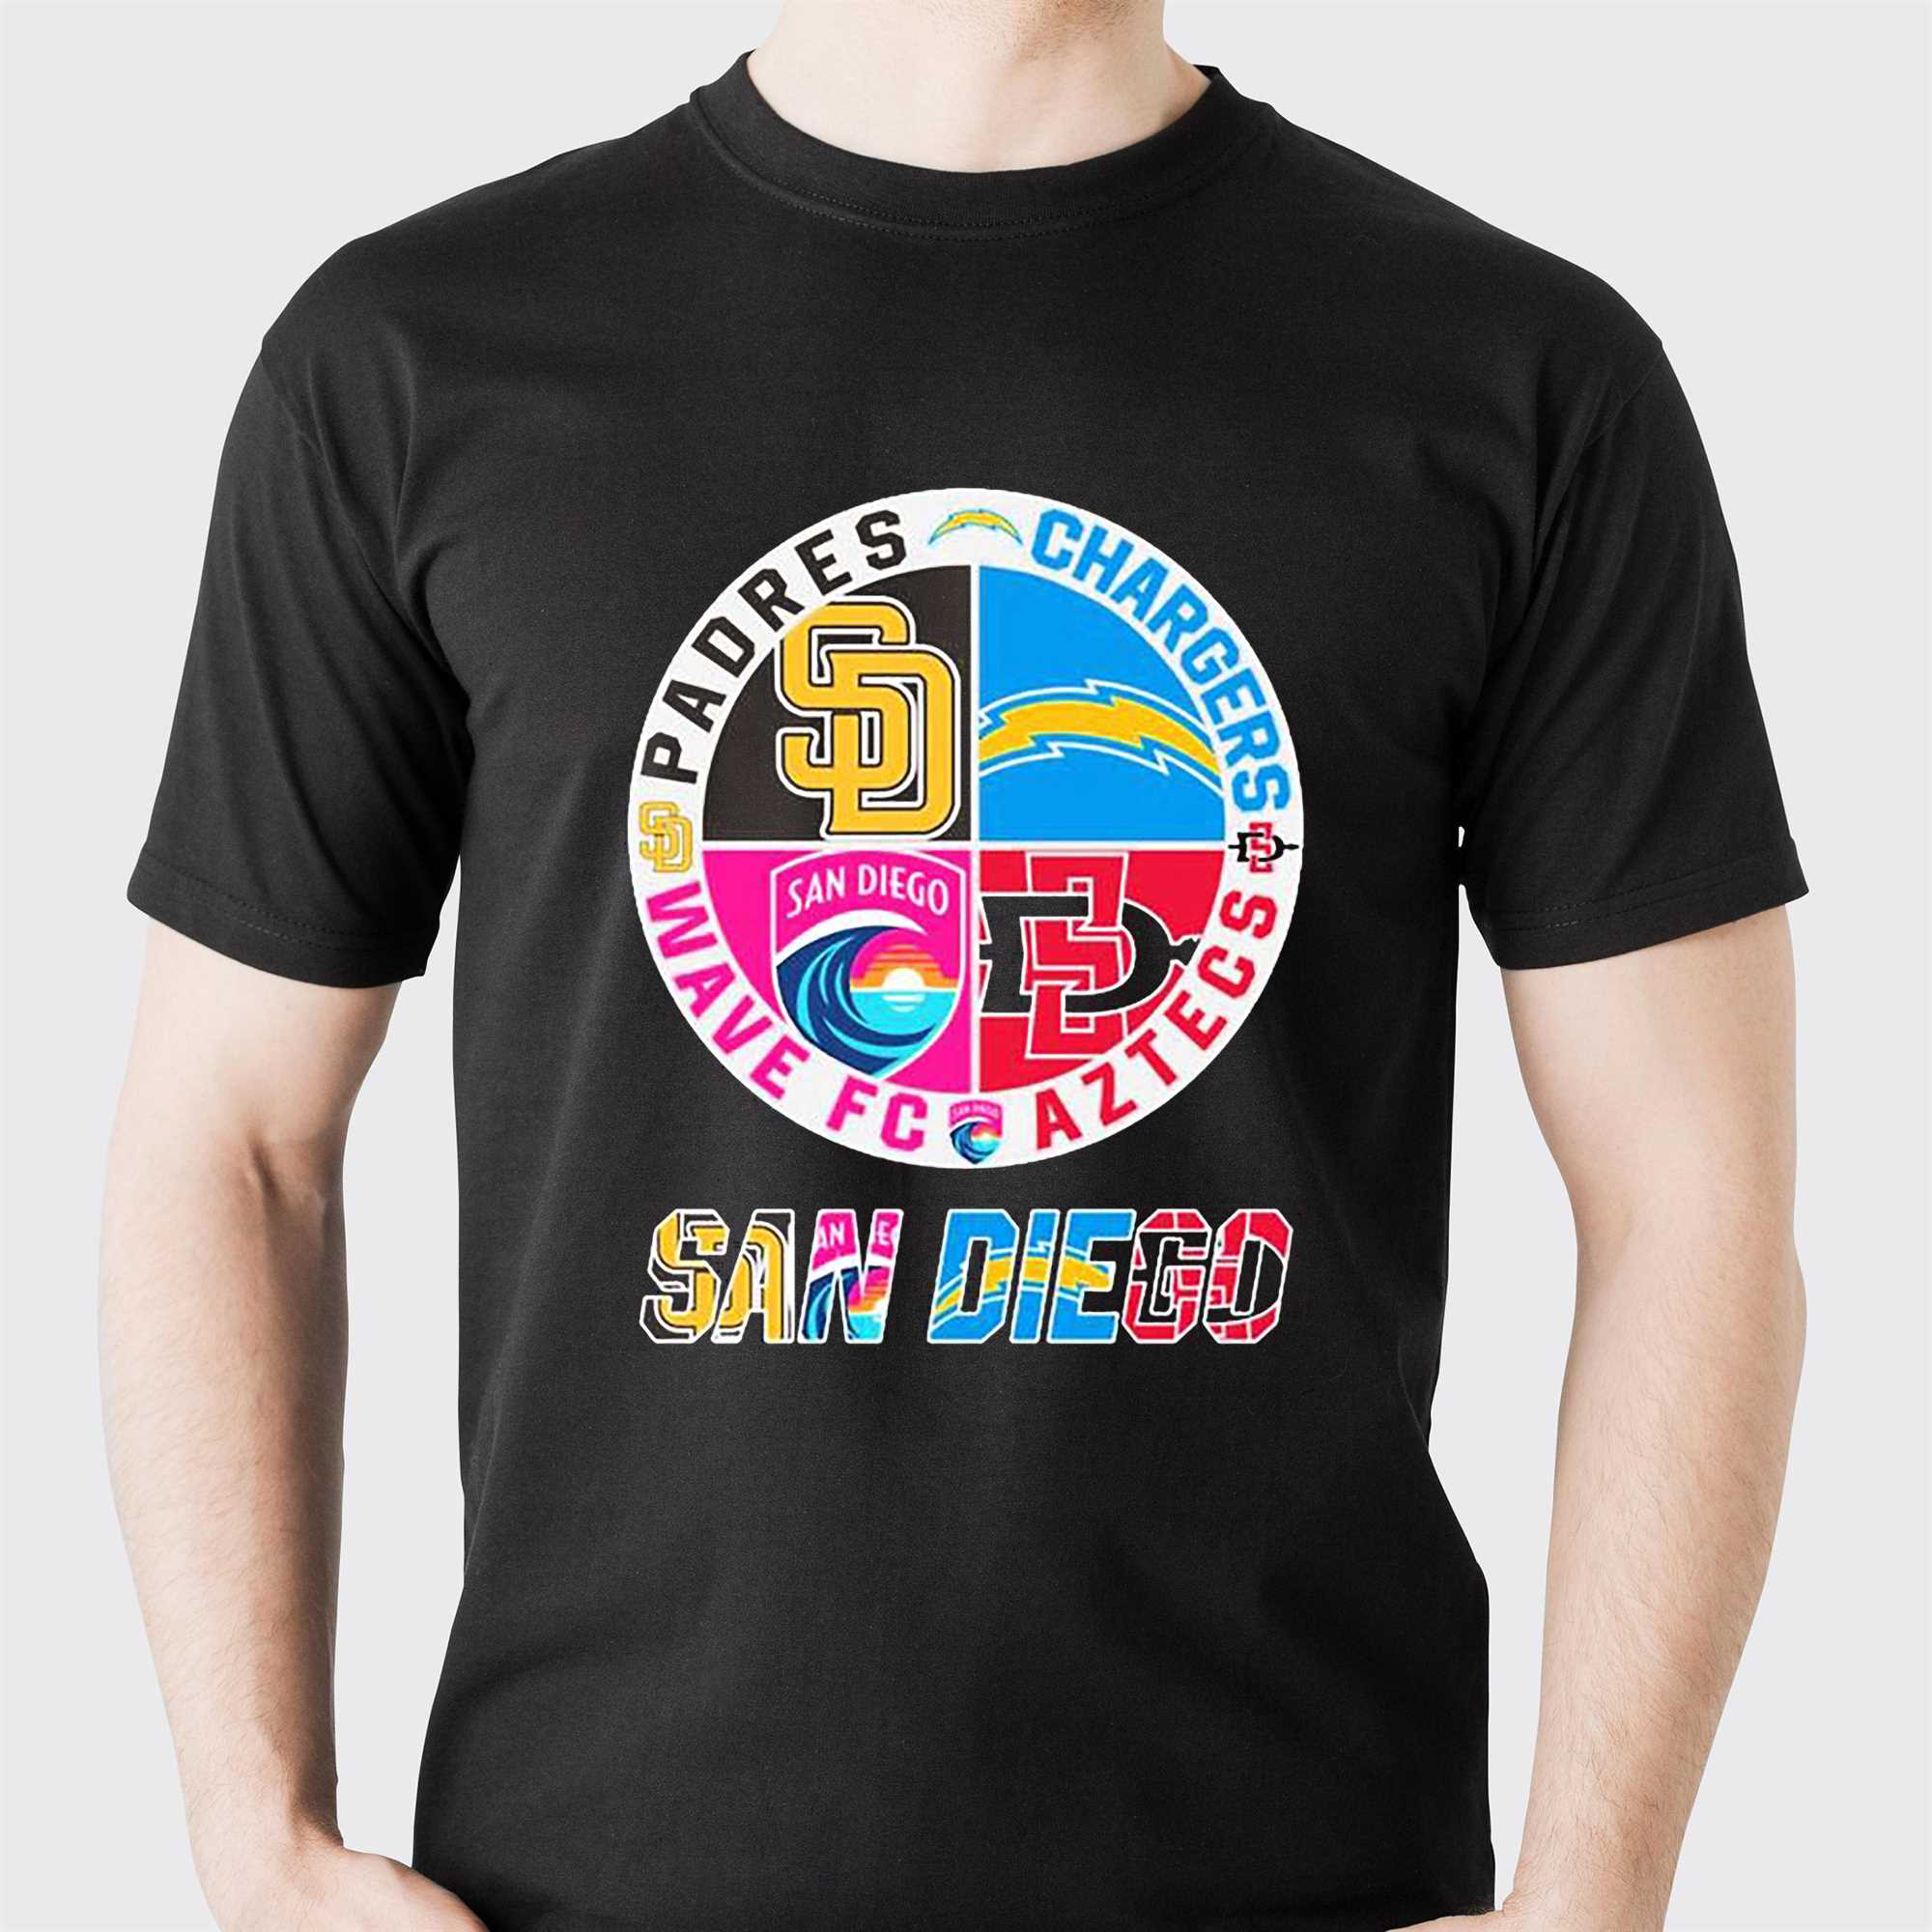 San Diego - California T-Shirt - Shirtstore